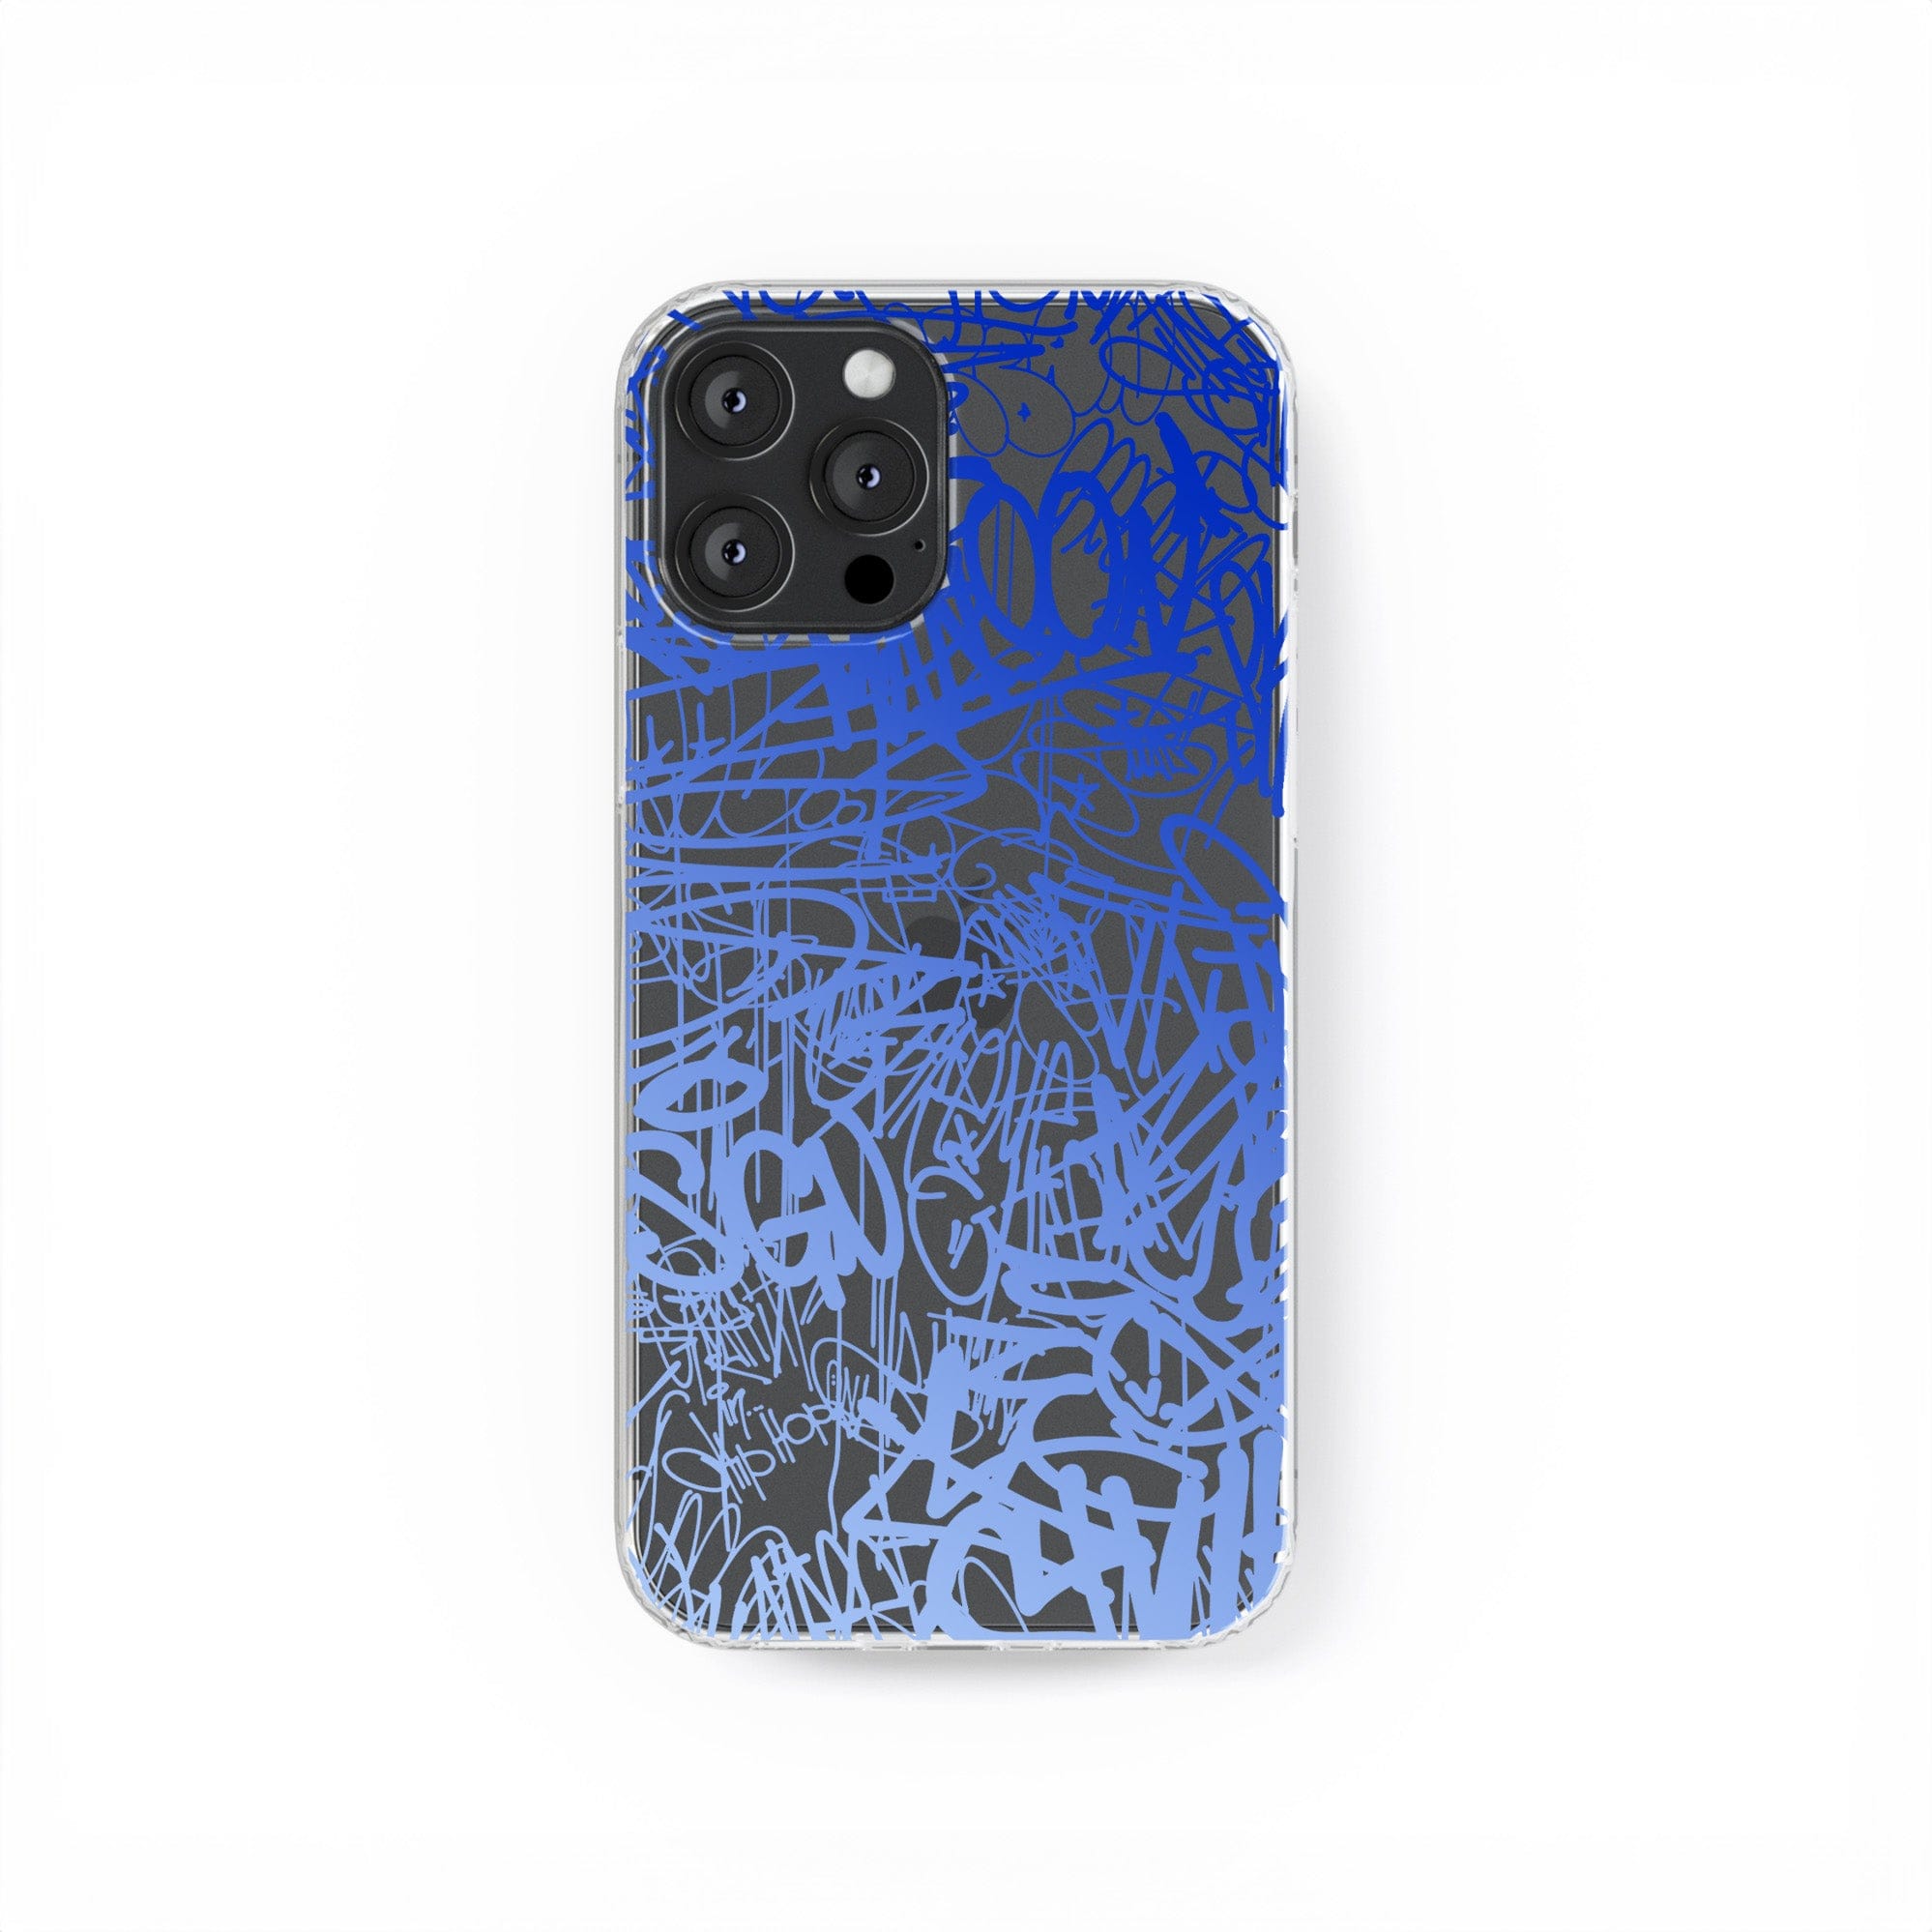 Transparent silicone case "Blue graffiti 1"